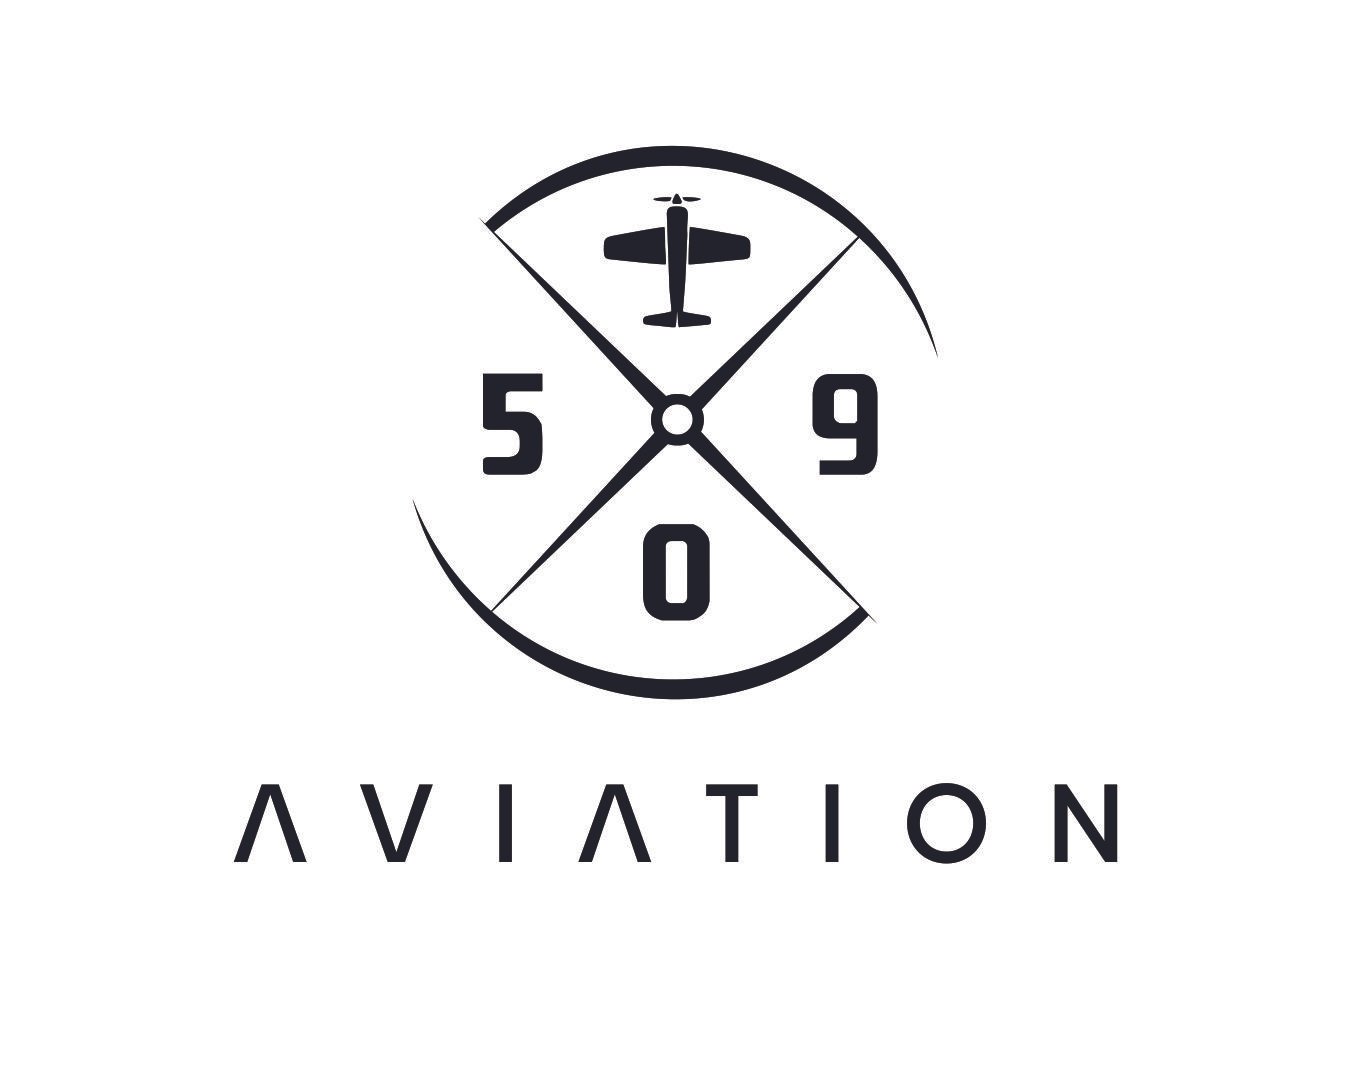                            509 Aviation